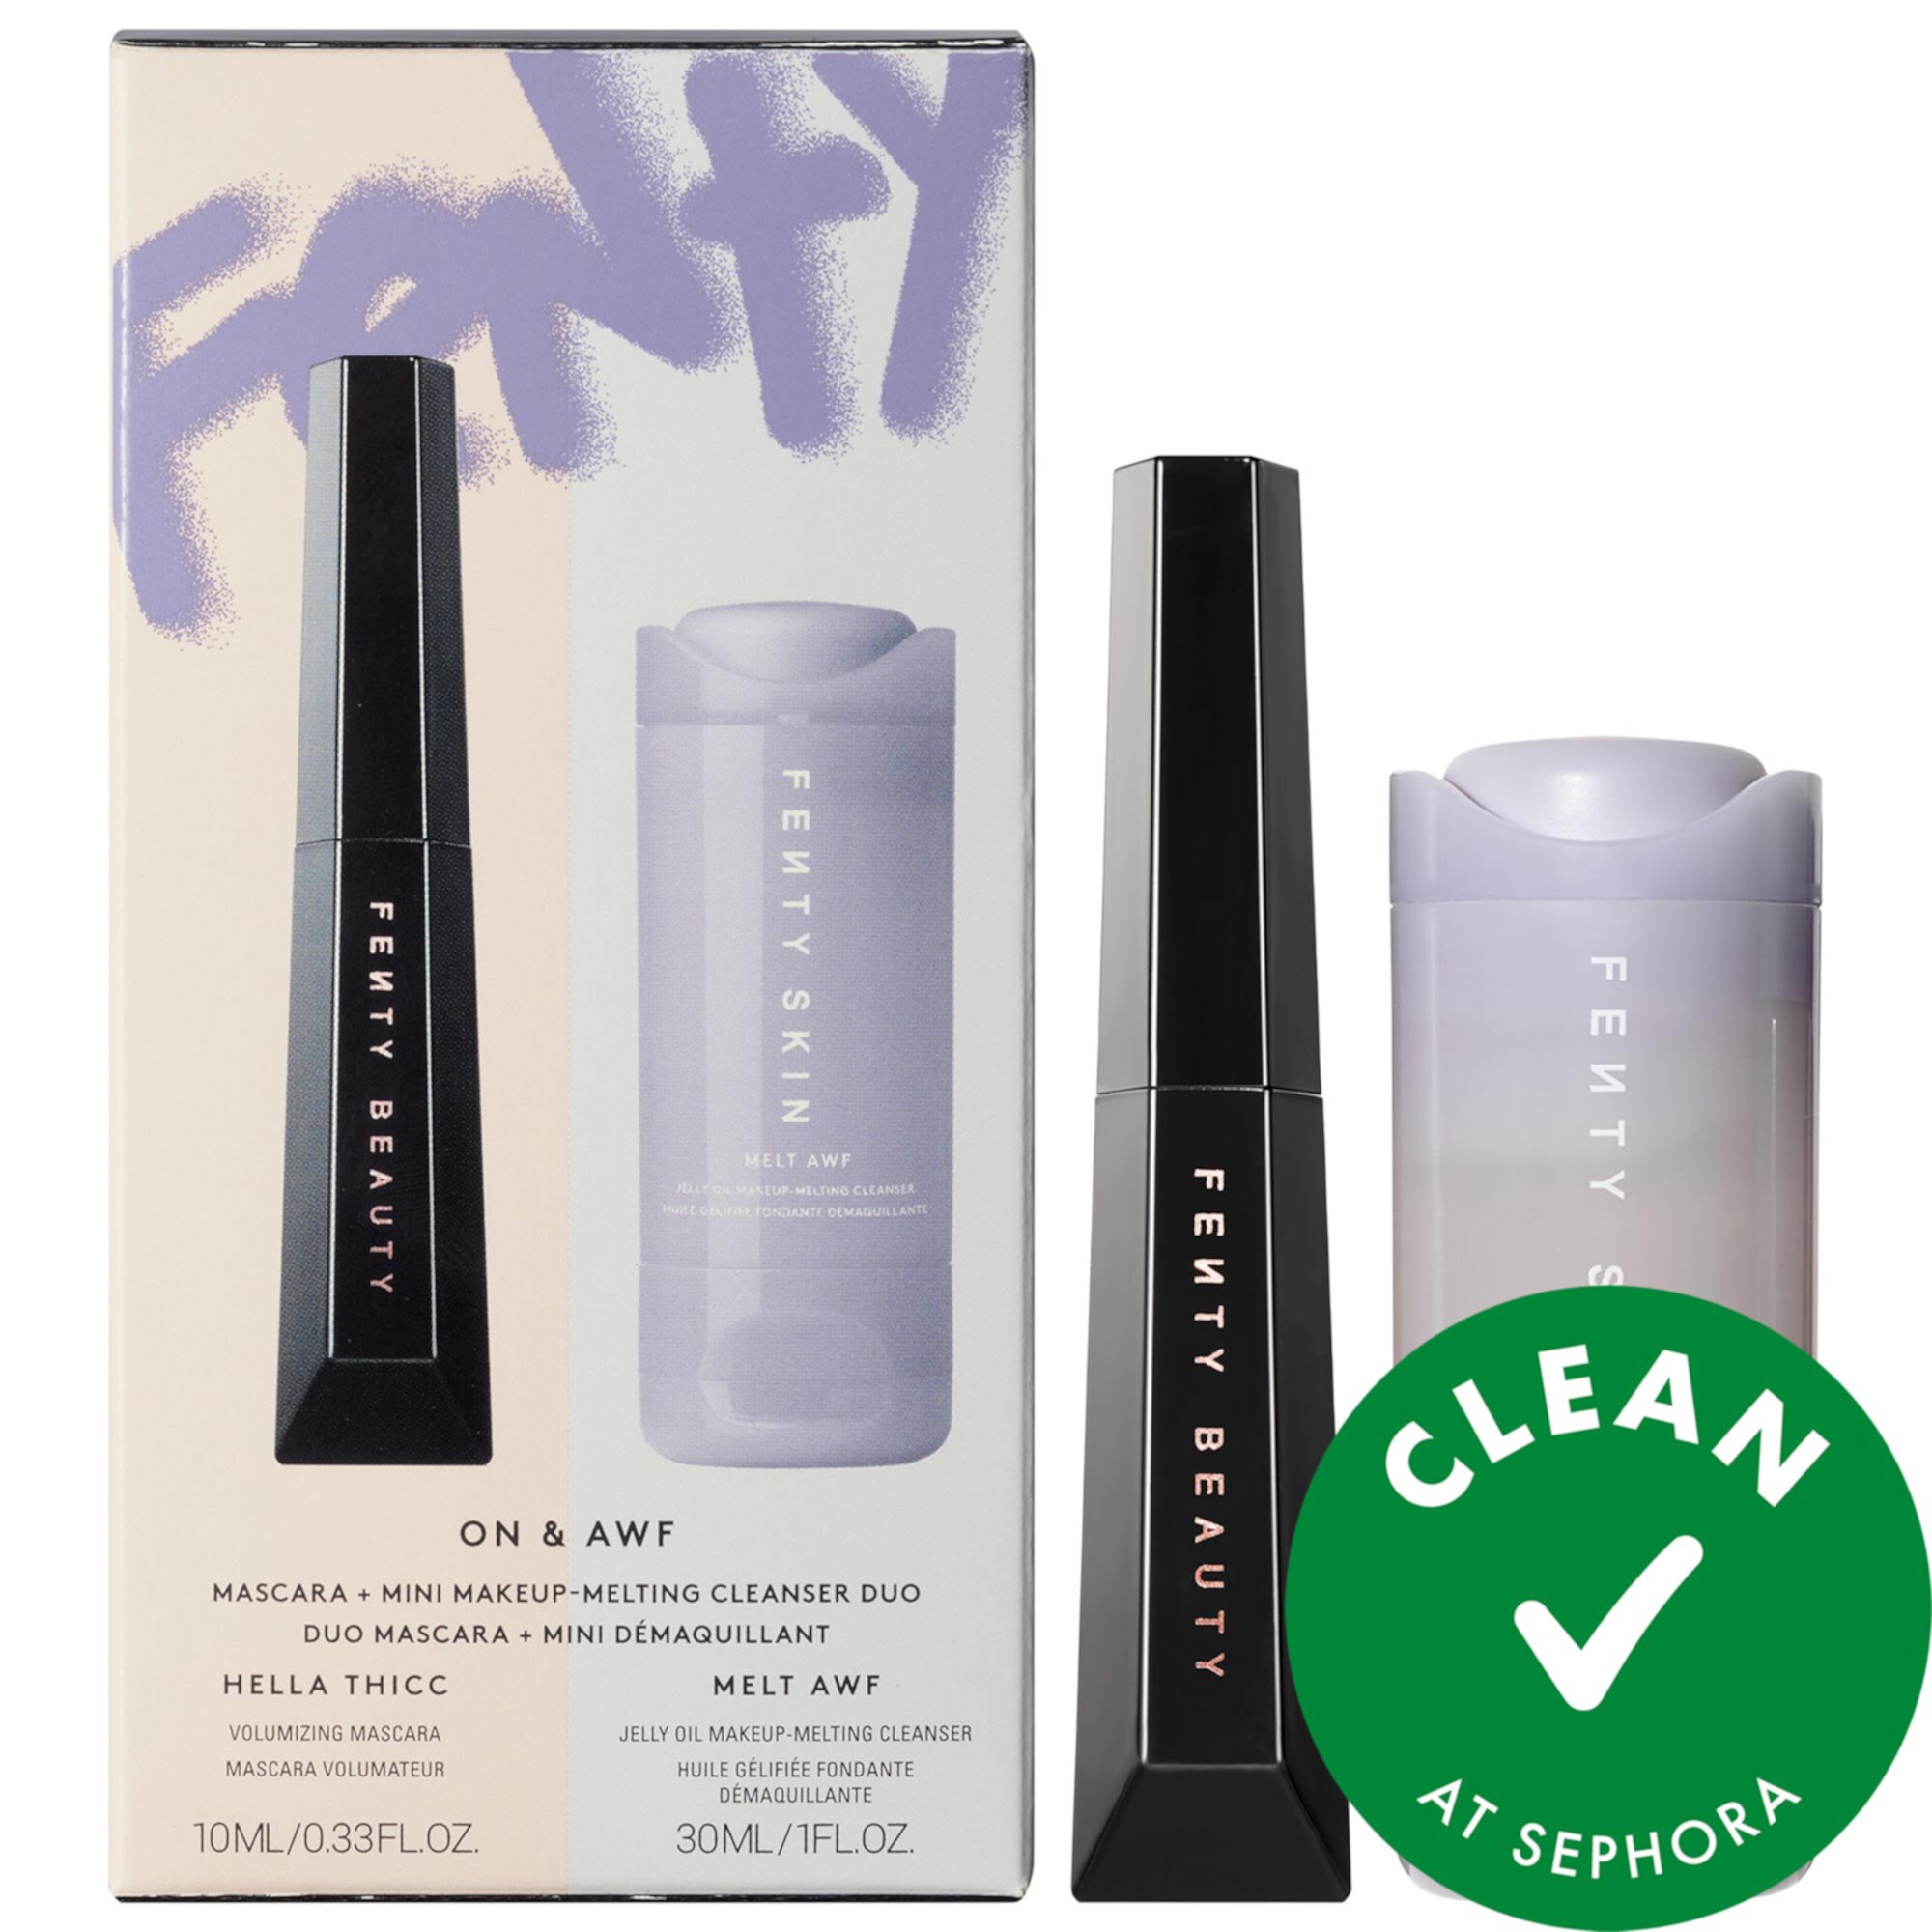 On & Awf Mascara and Mini Makeup-Melting Cleanser Duo Fenty Skin